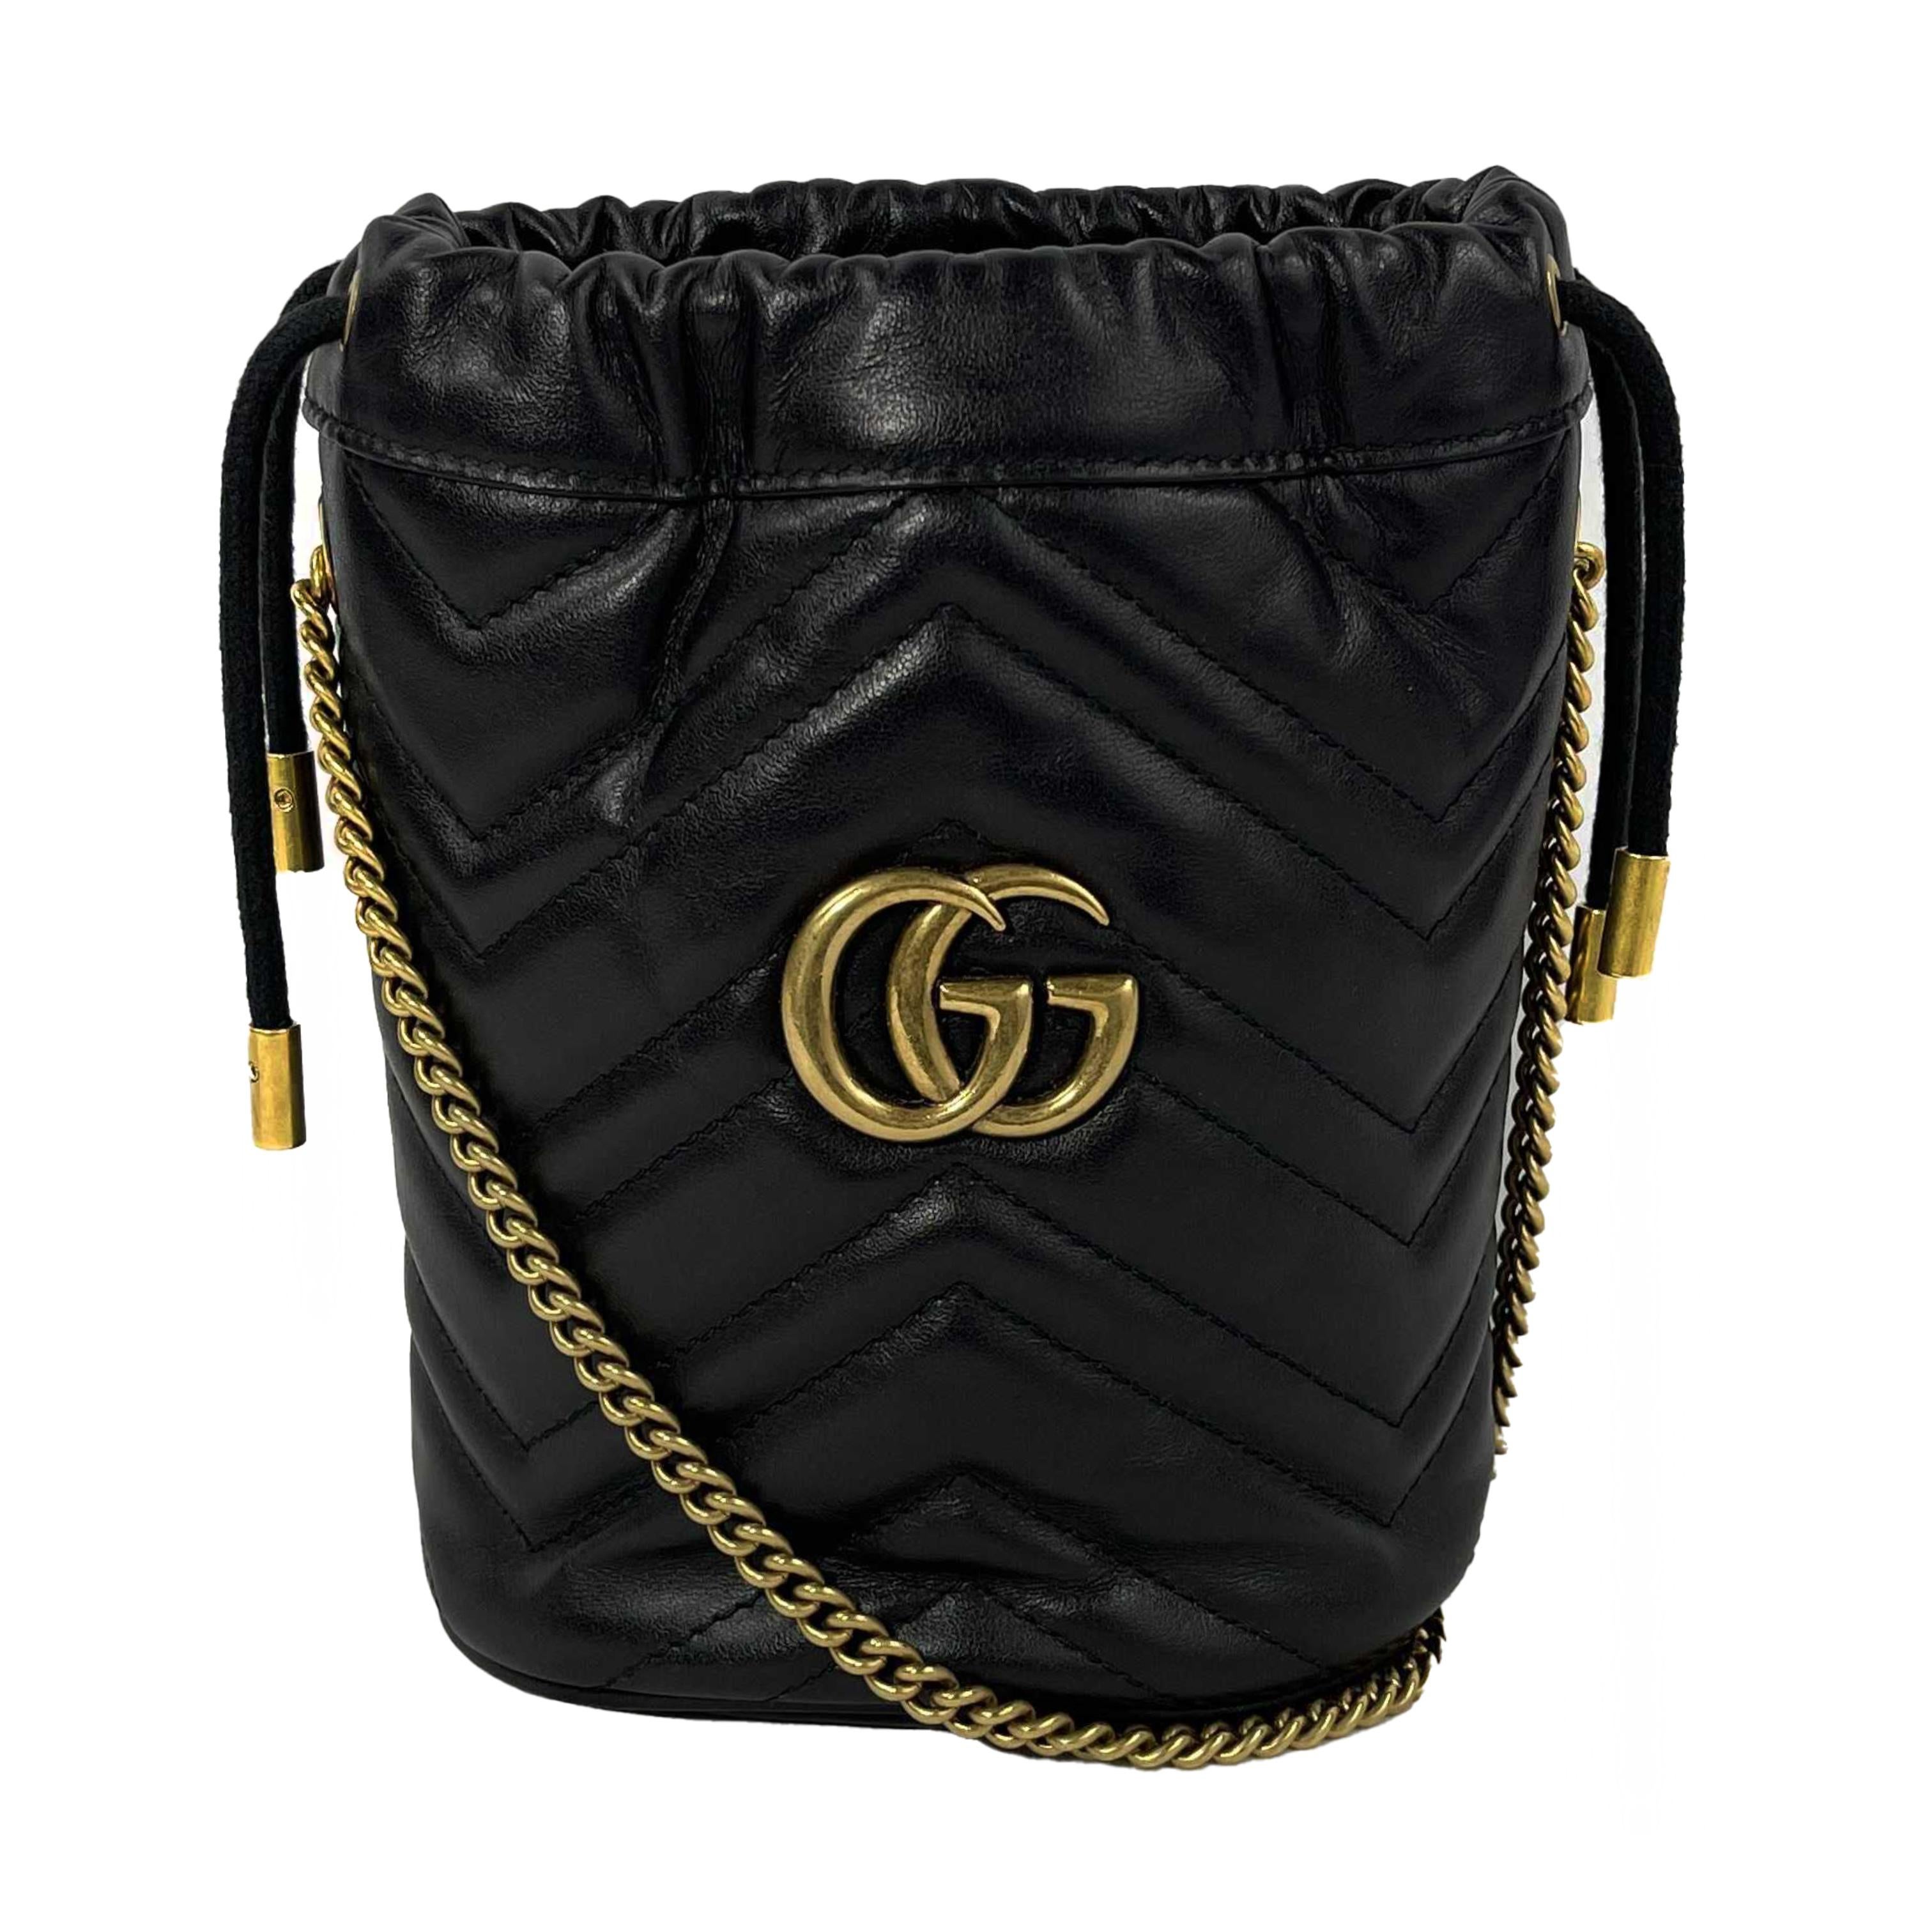 Gucci - Very Good - GG Marmont Bucket Bag Mini - Black - Handbag 8